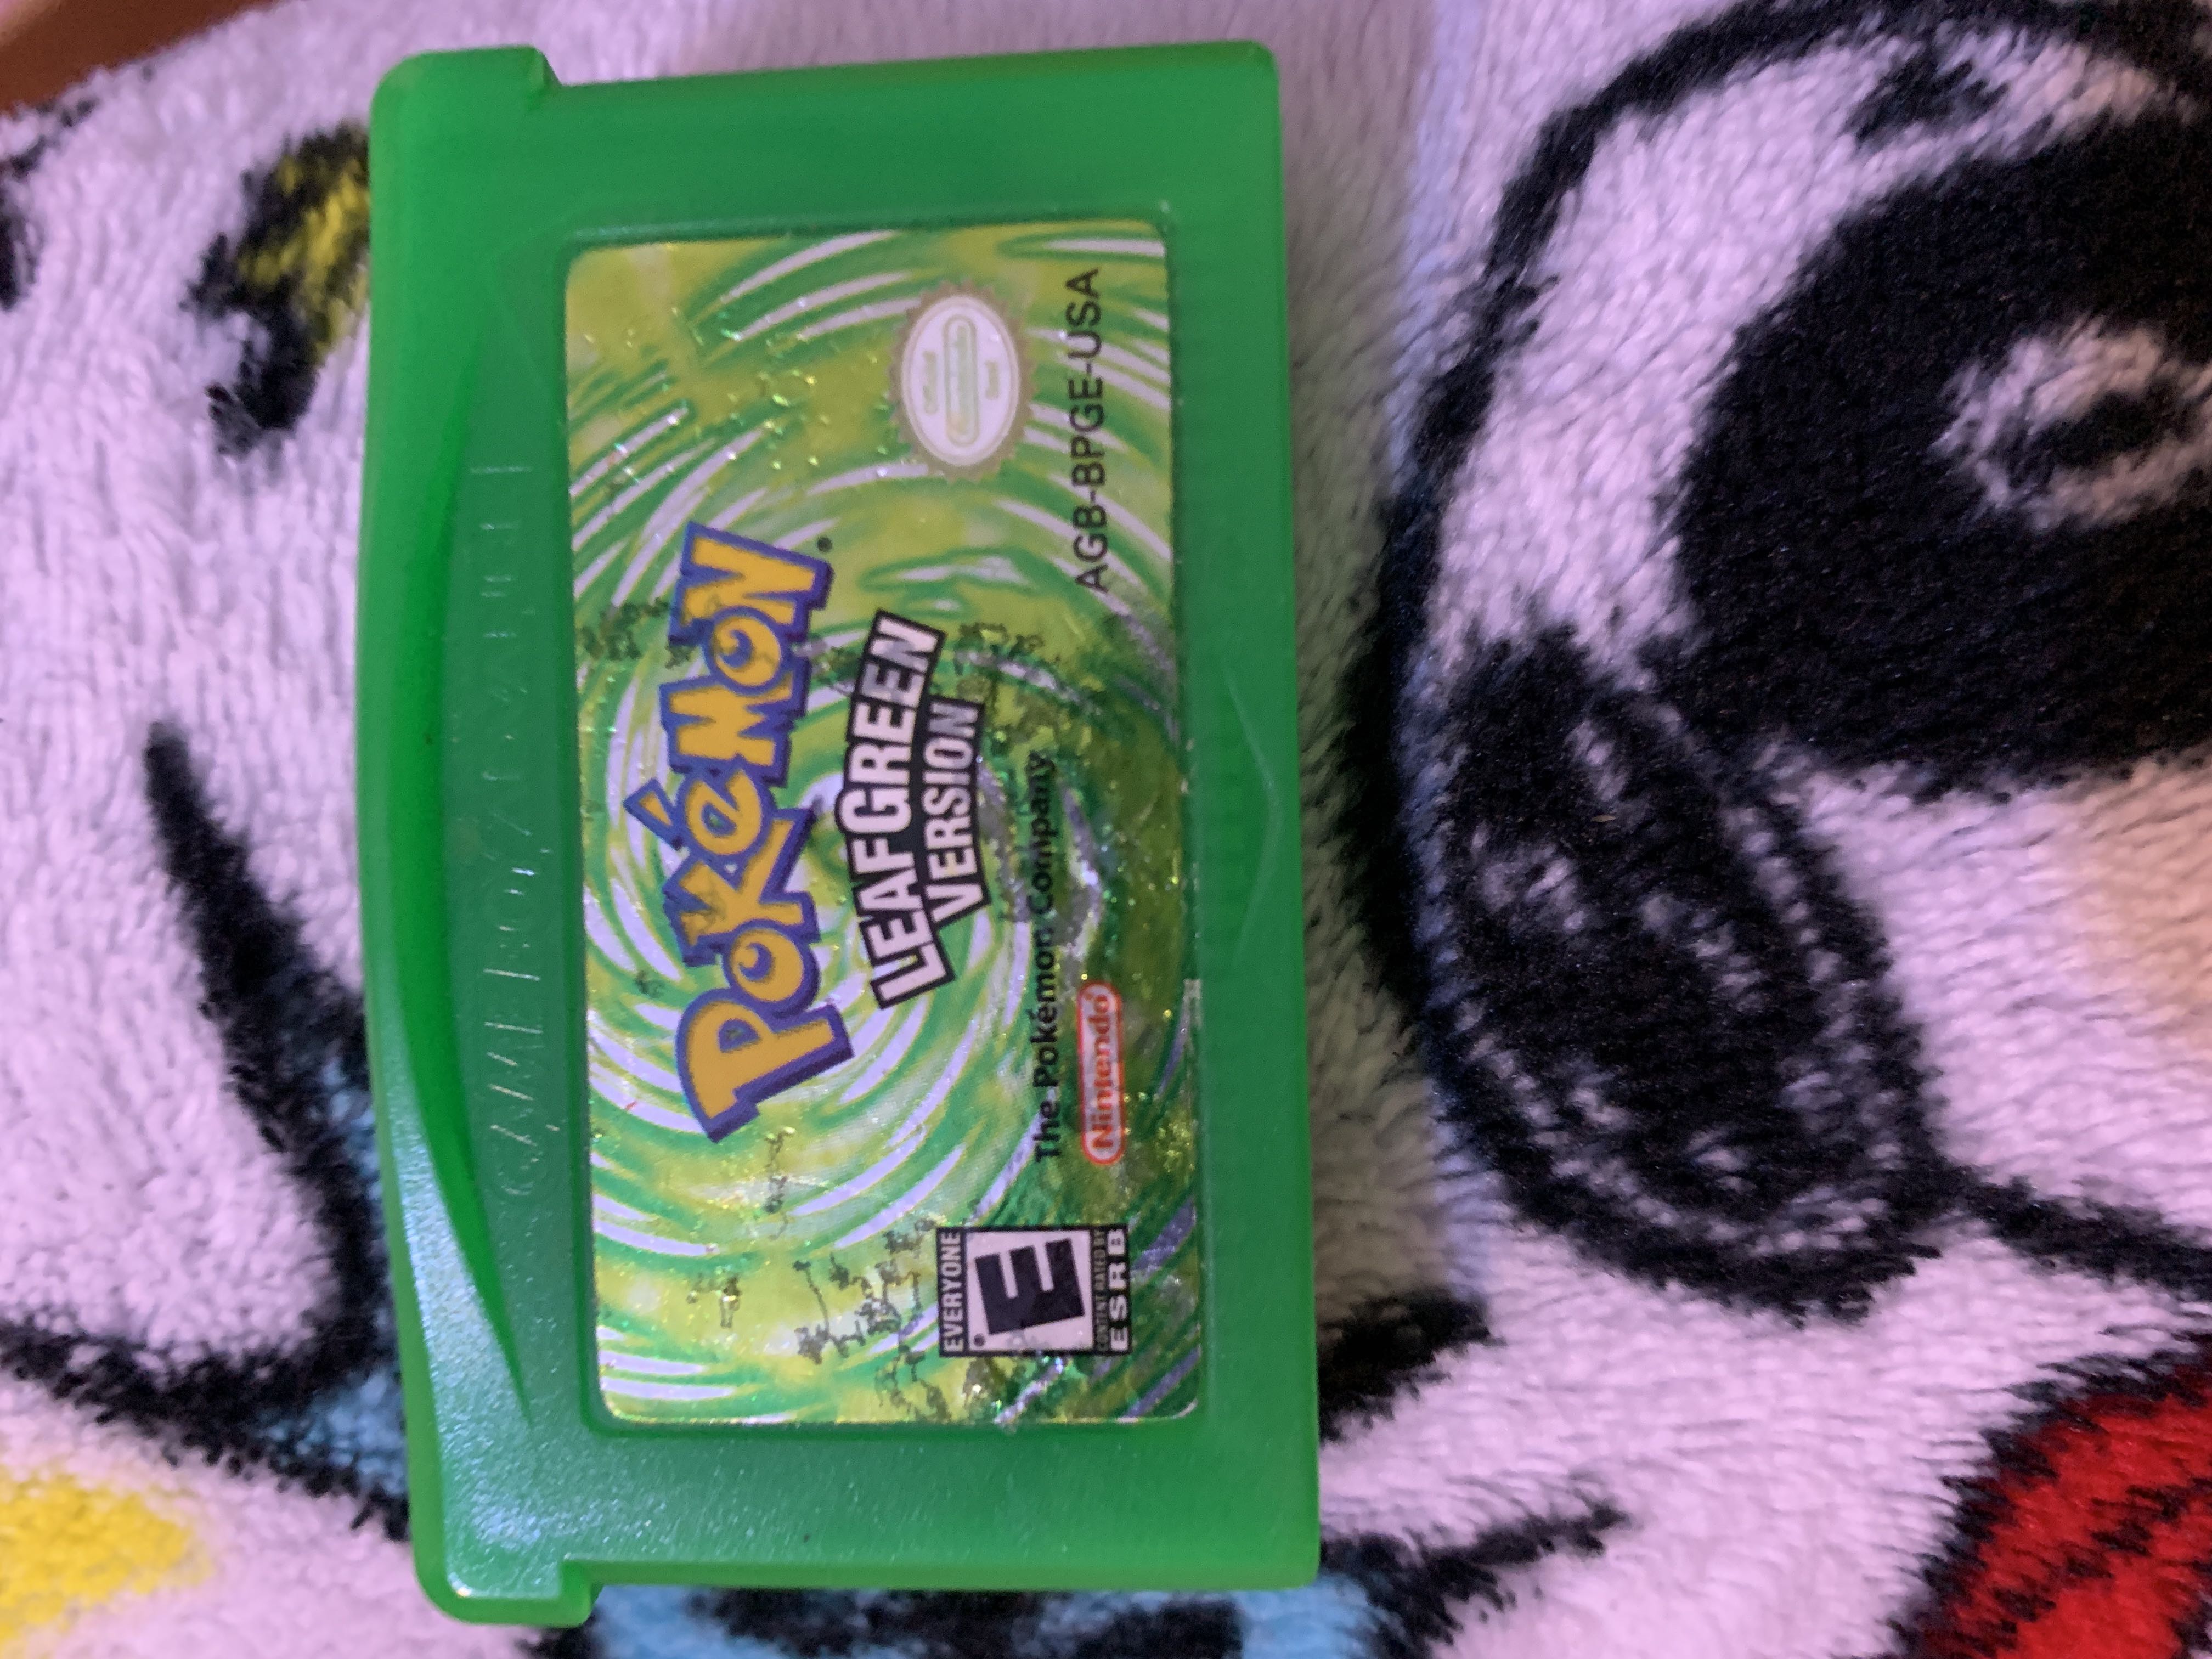 Pokémon Leaf Green - Nintendo Game Boy Advance (GBA) (GameFreak - 1) video game collectible - Main Image 3